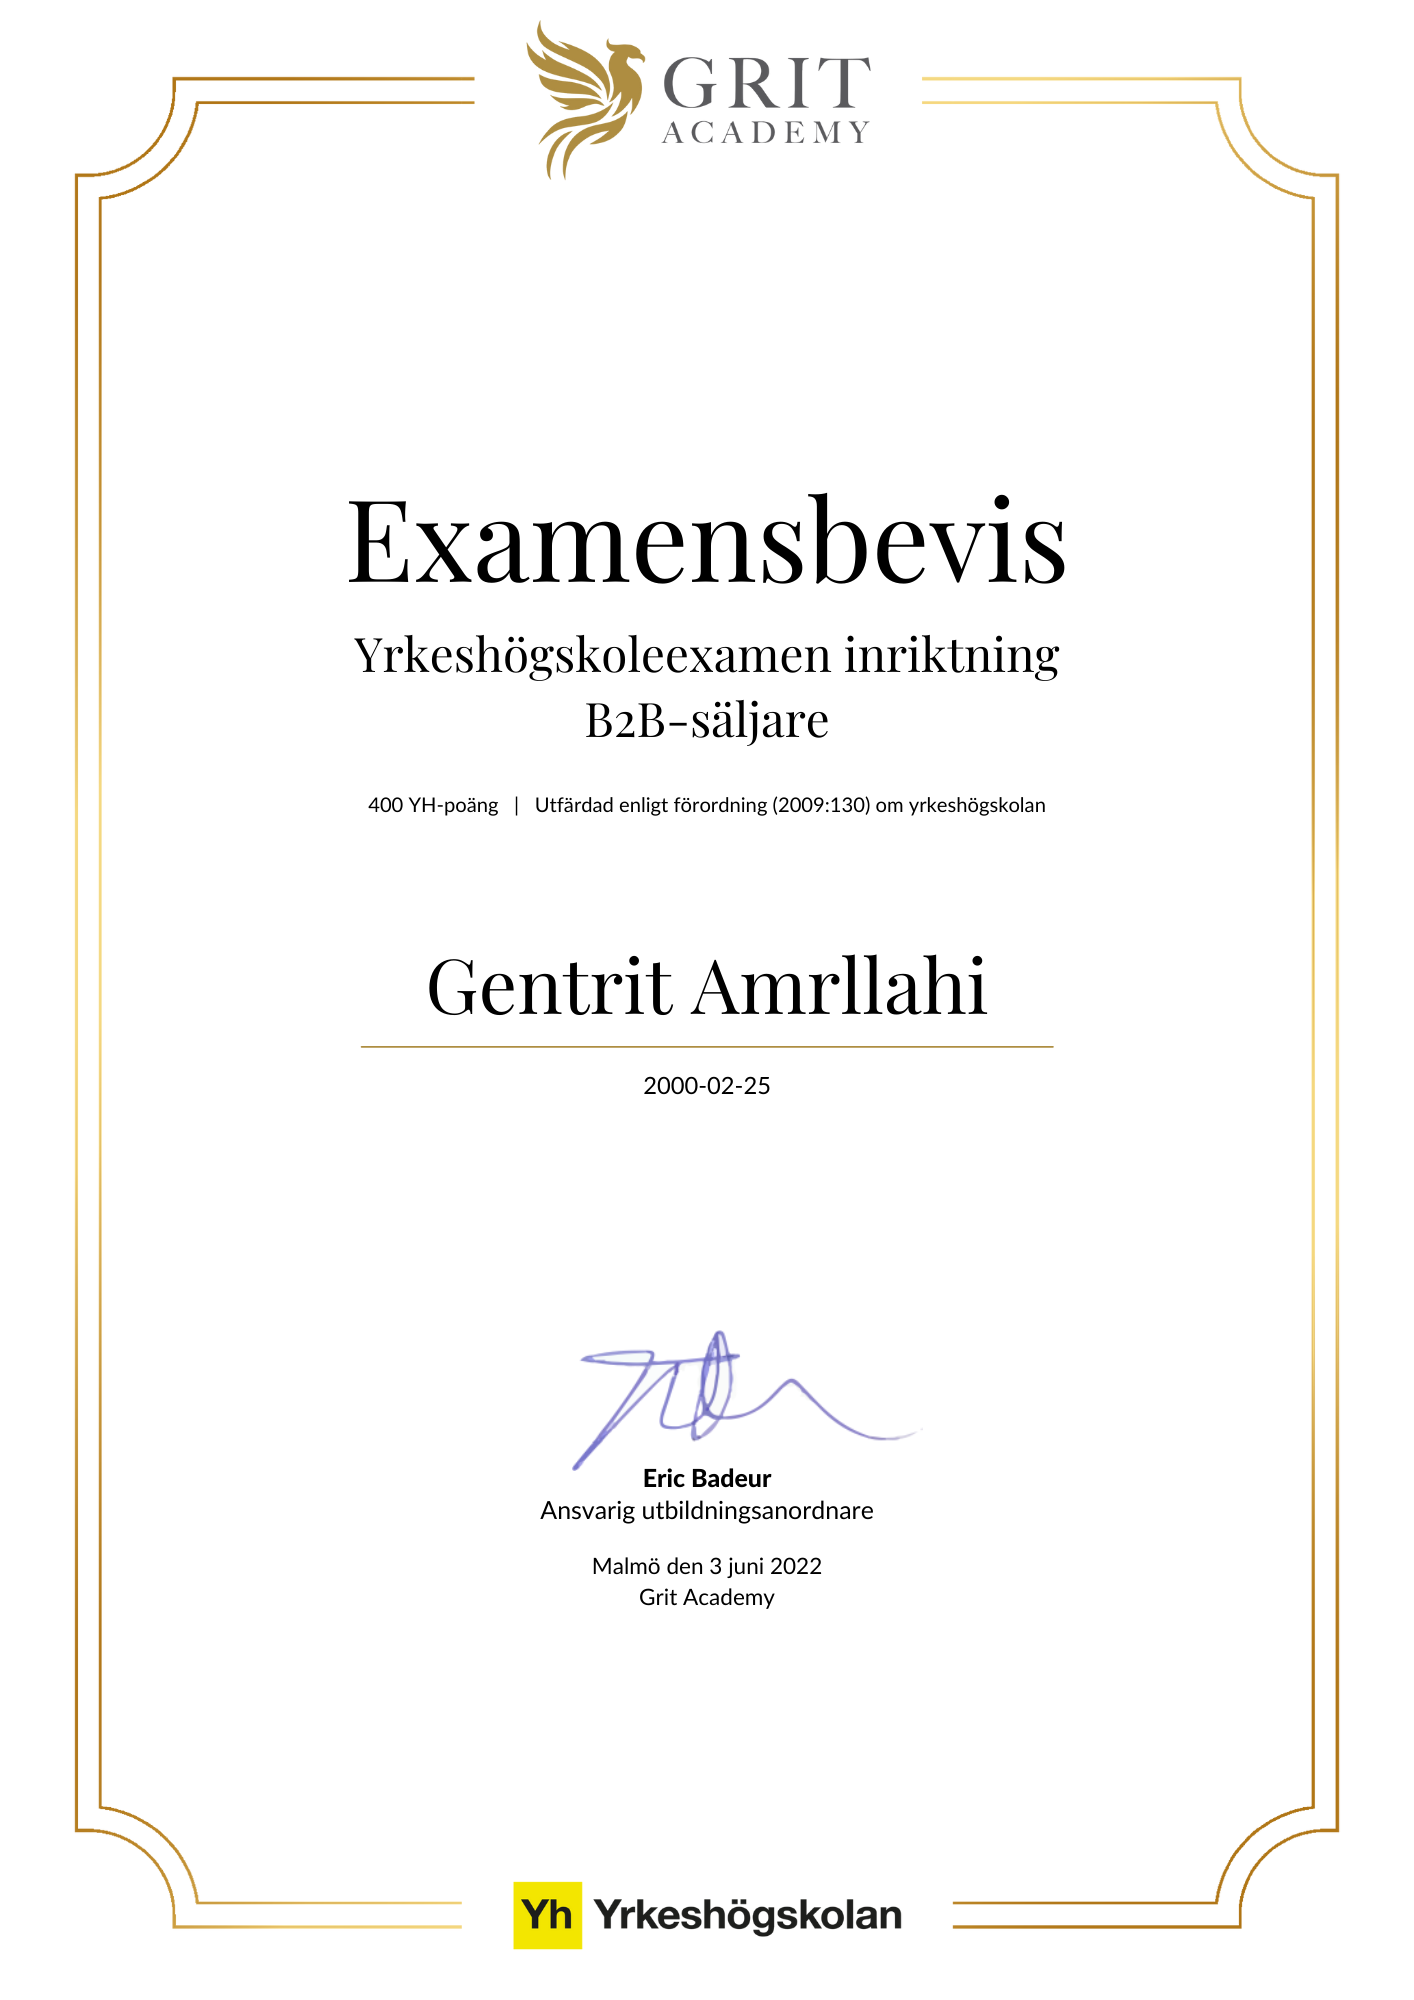 Examensbevis Gentrit Amrllahi (4)